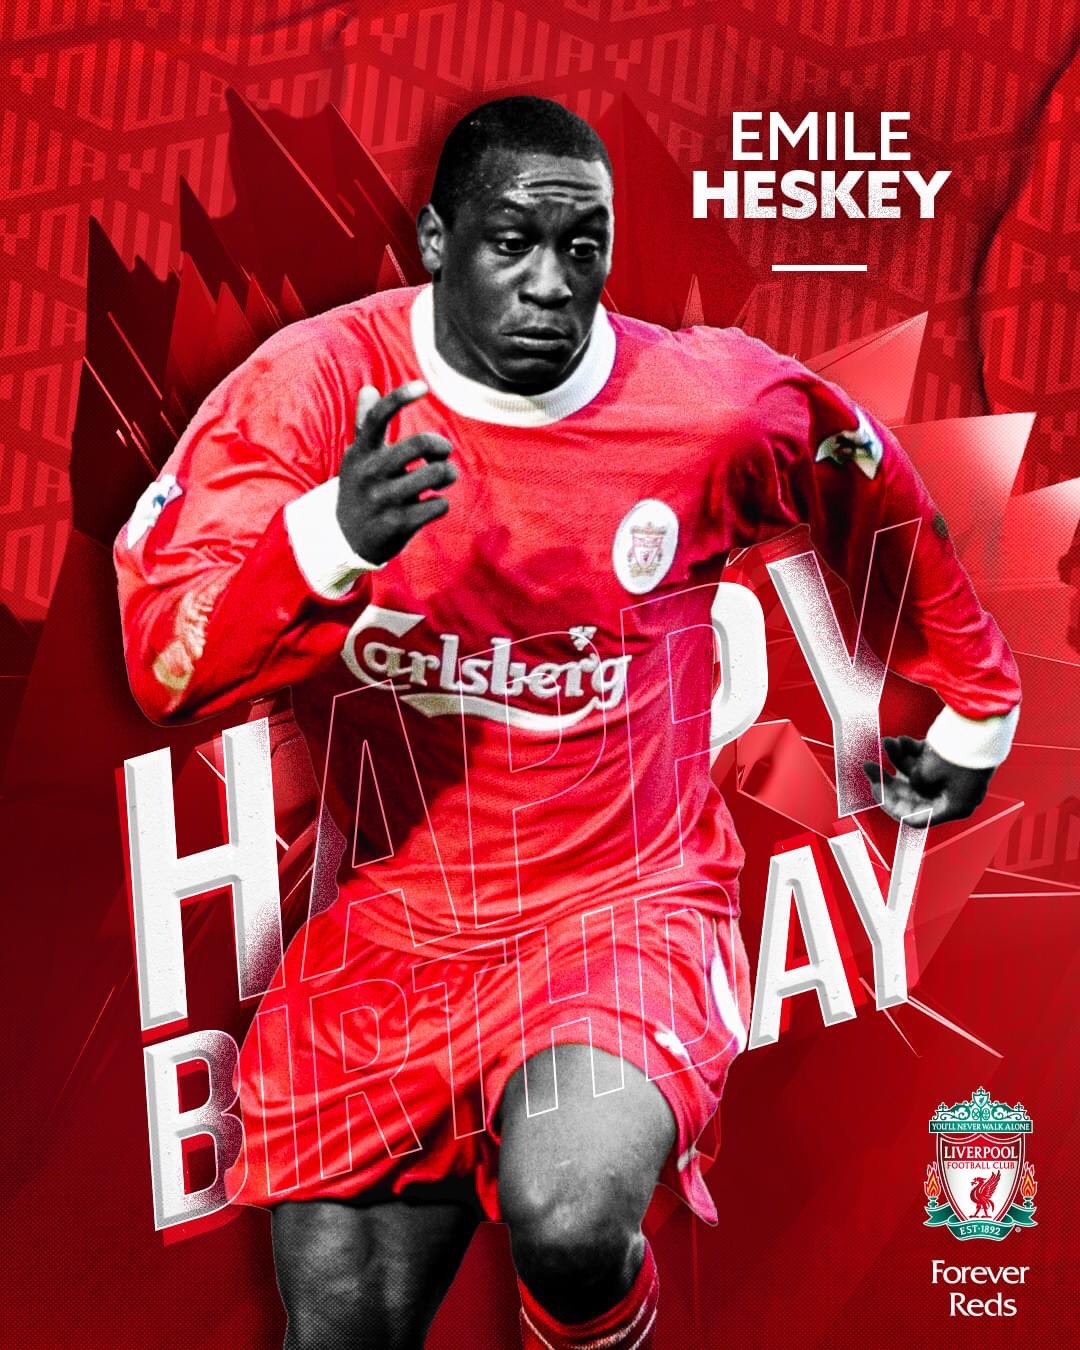 Wishing Emile Heskey a happy birthday 